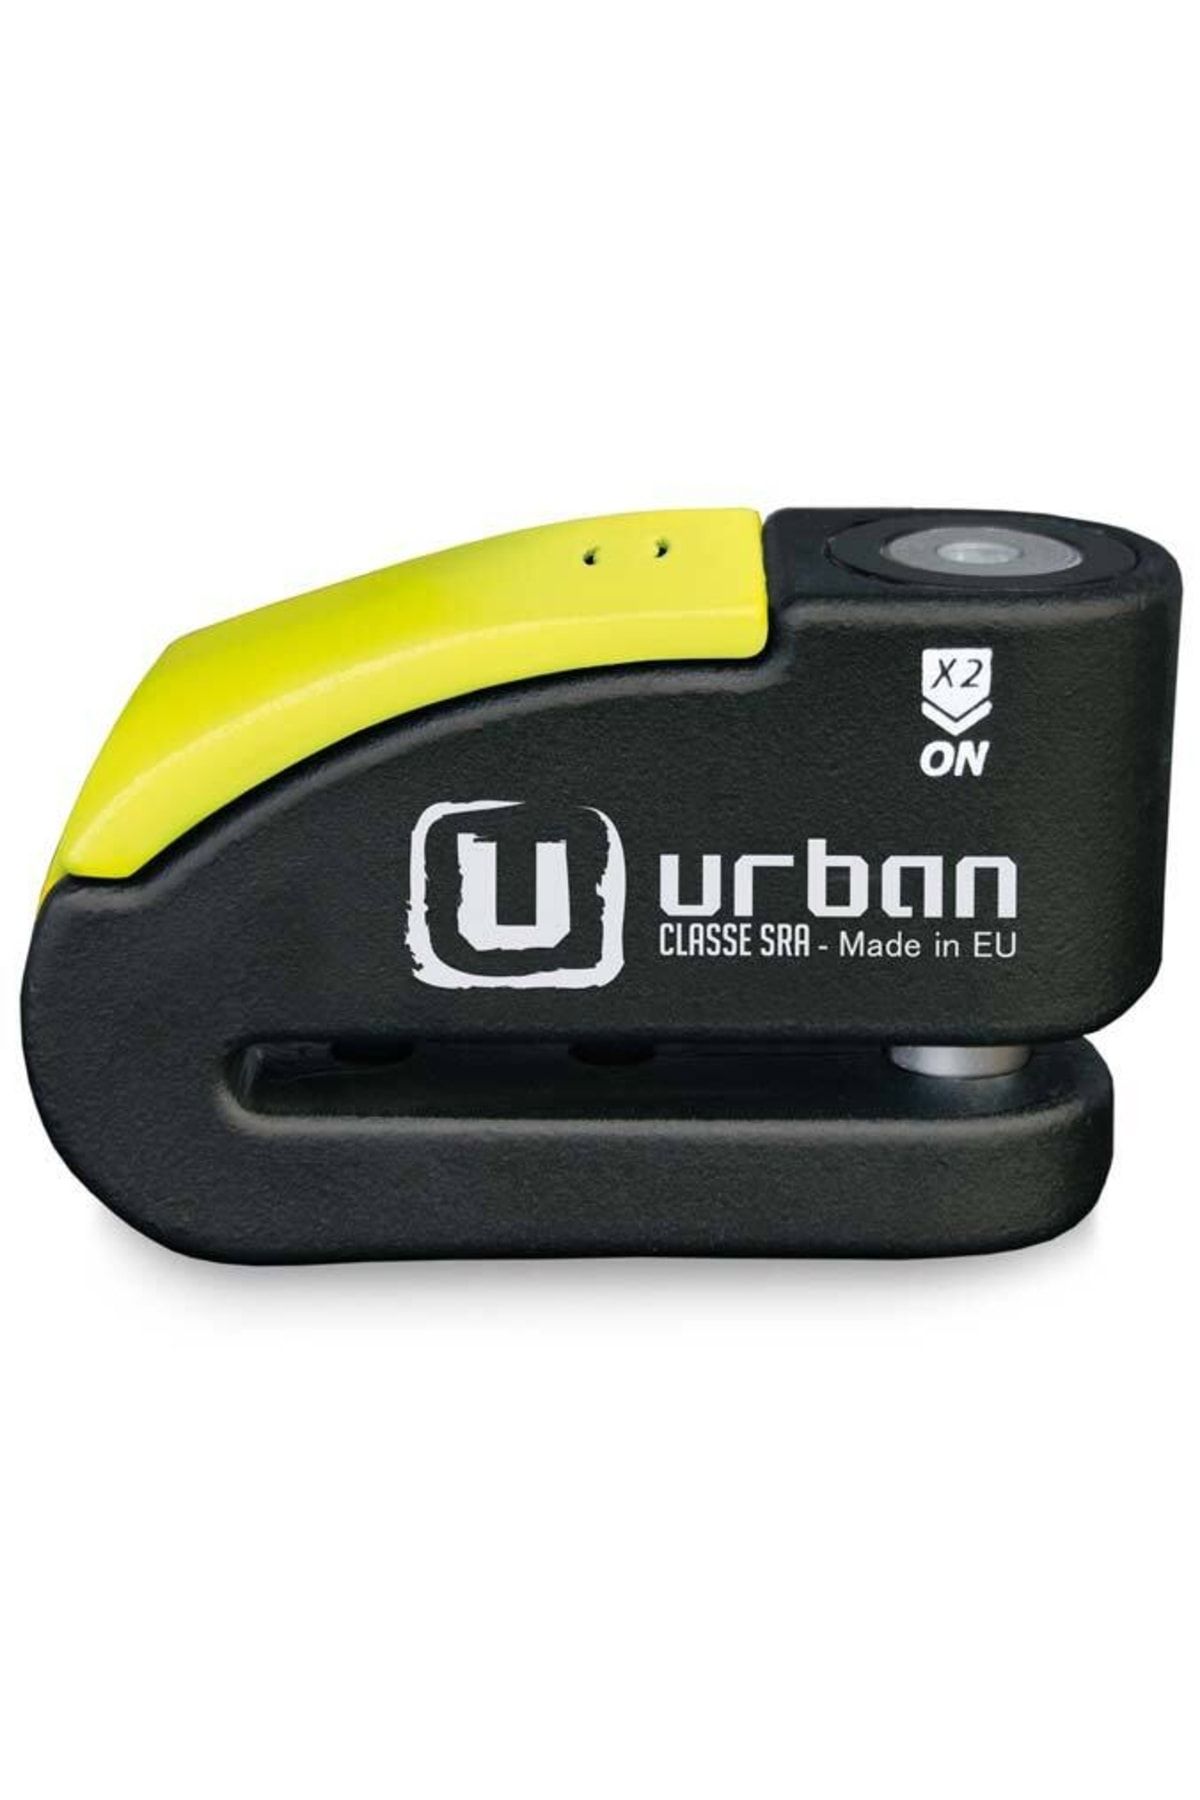 urban security Urban Security 999 S.r.a Class Alarm Disk Lock 14mm